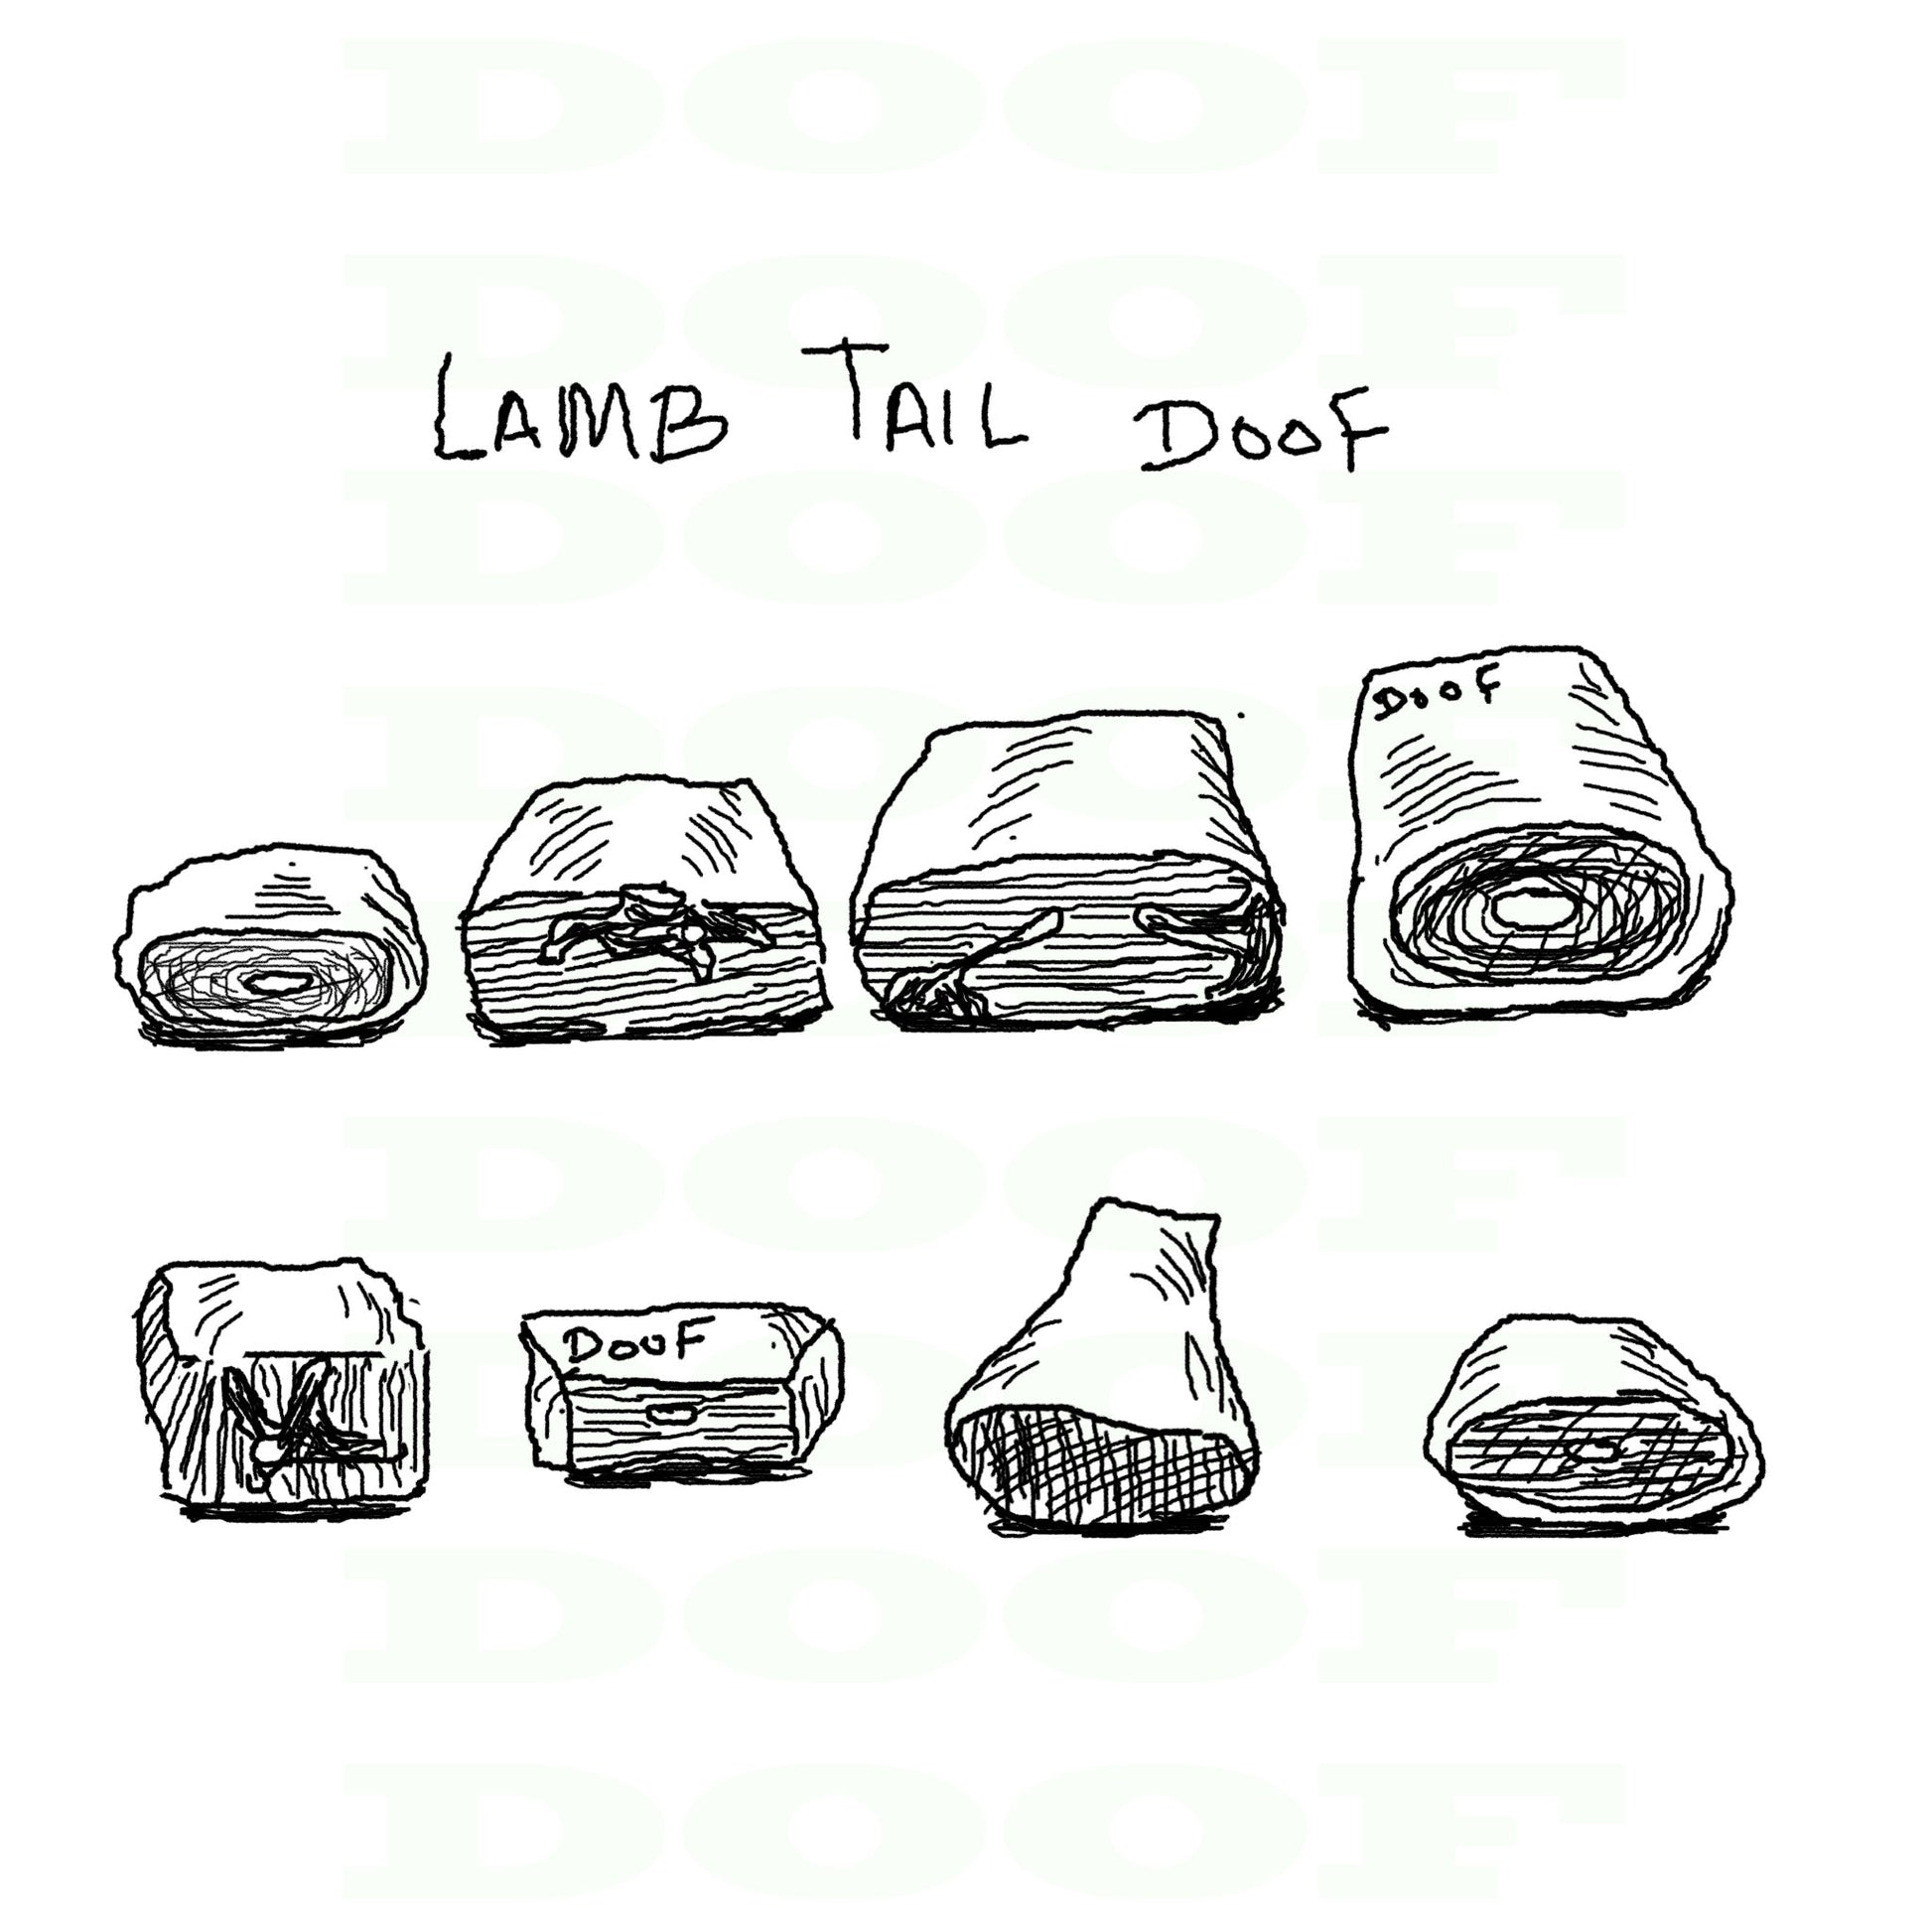 Lamb tail Doof sketch